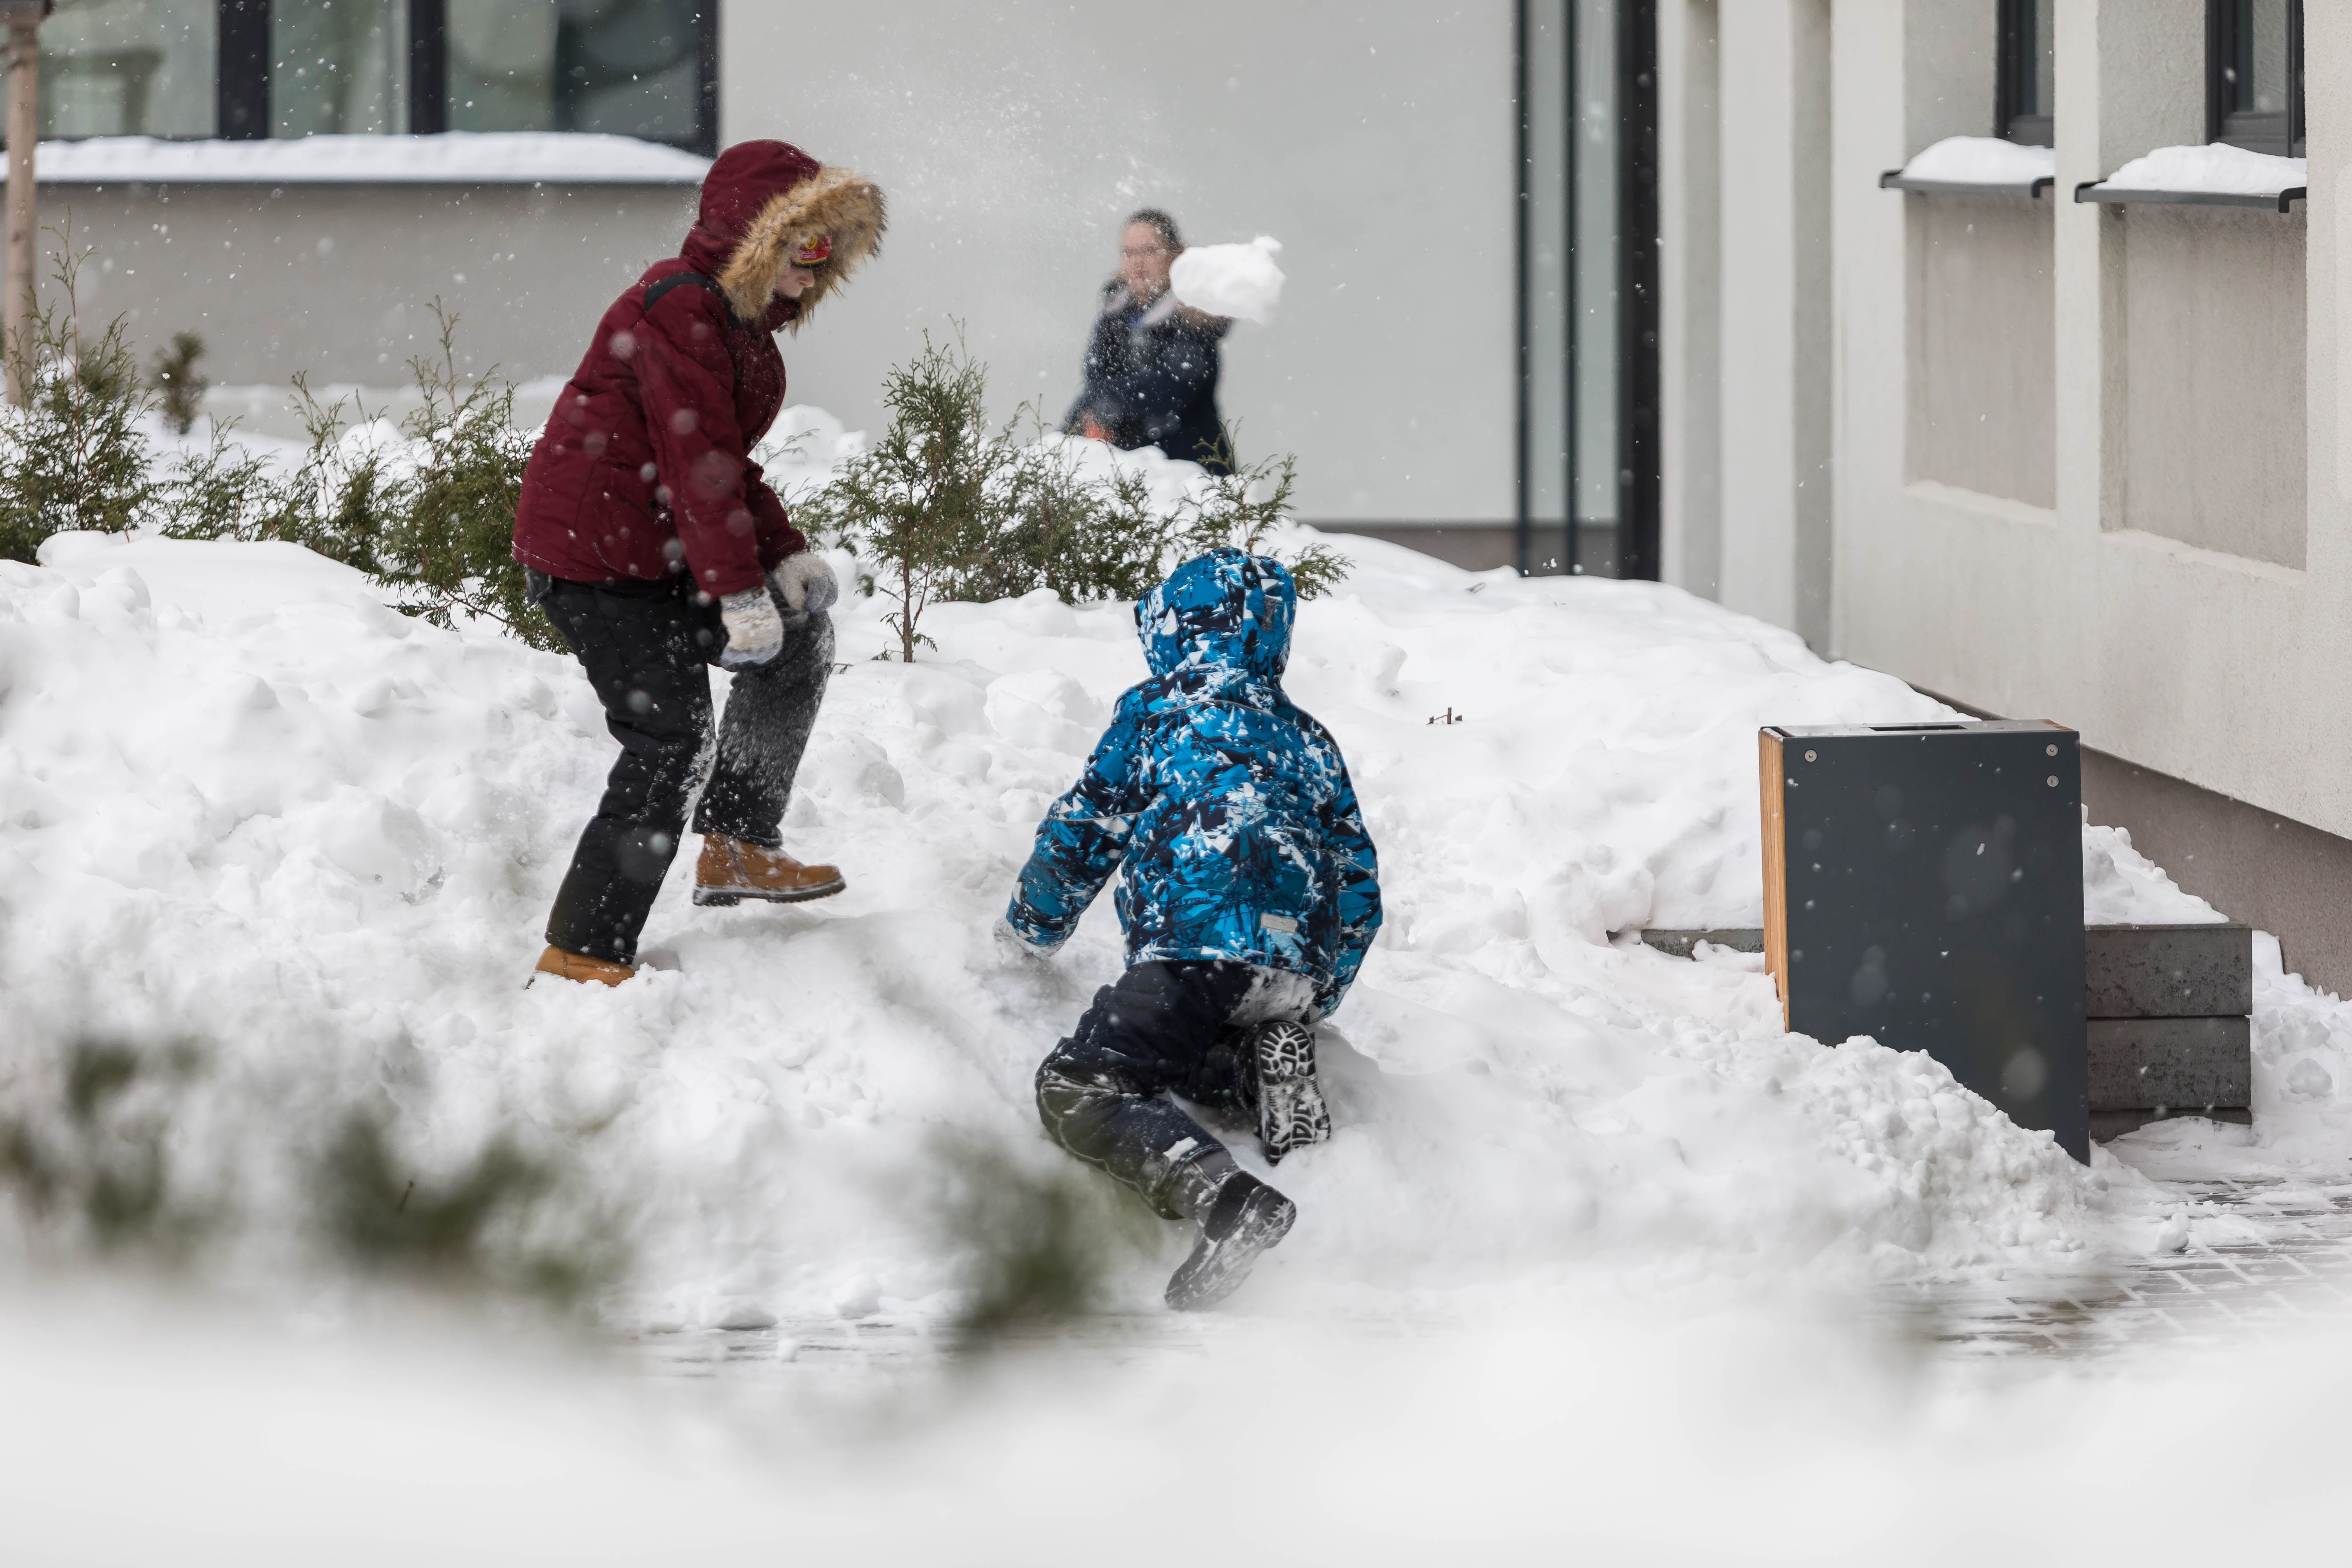 Играем со снегом. Зимние игры во дворе. Игра в снежки. Дети во дворе зимой. Прогулка во дворе.